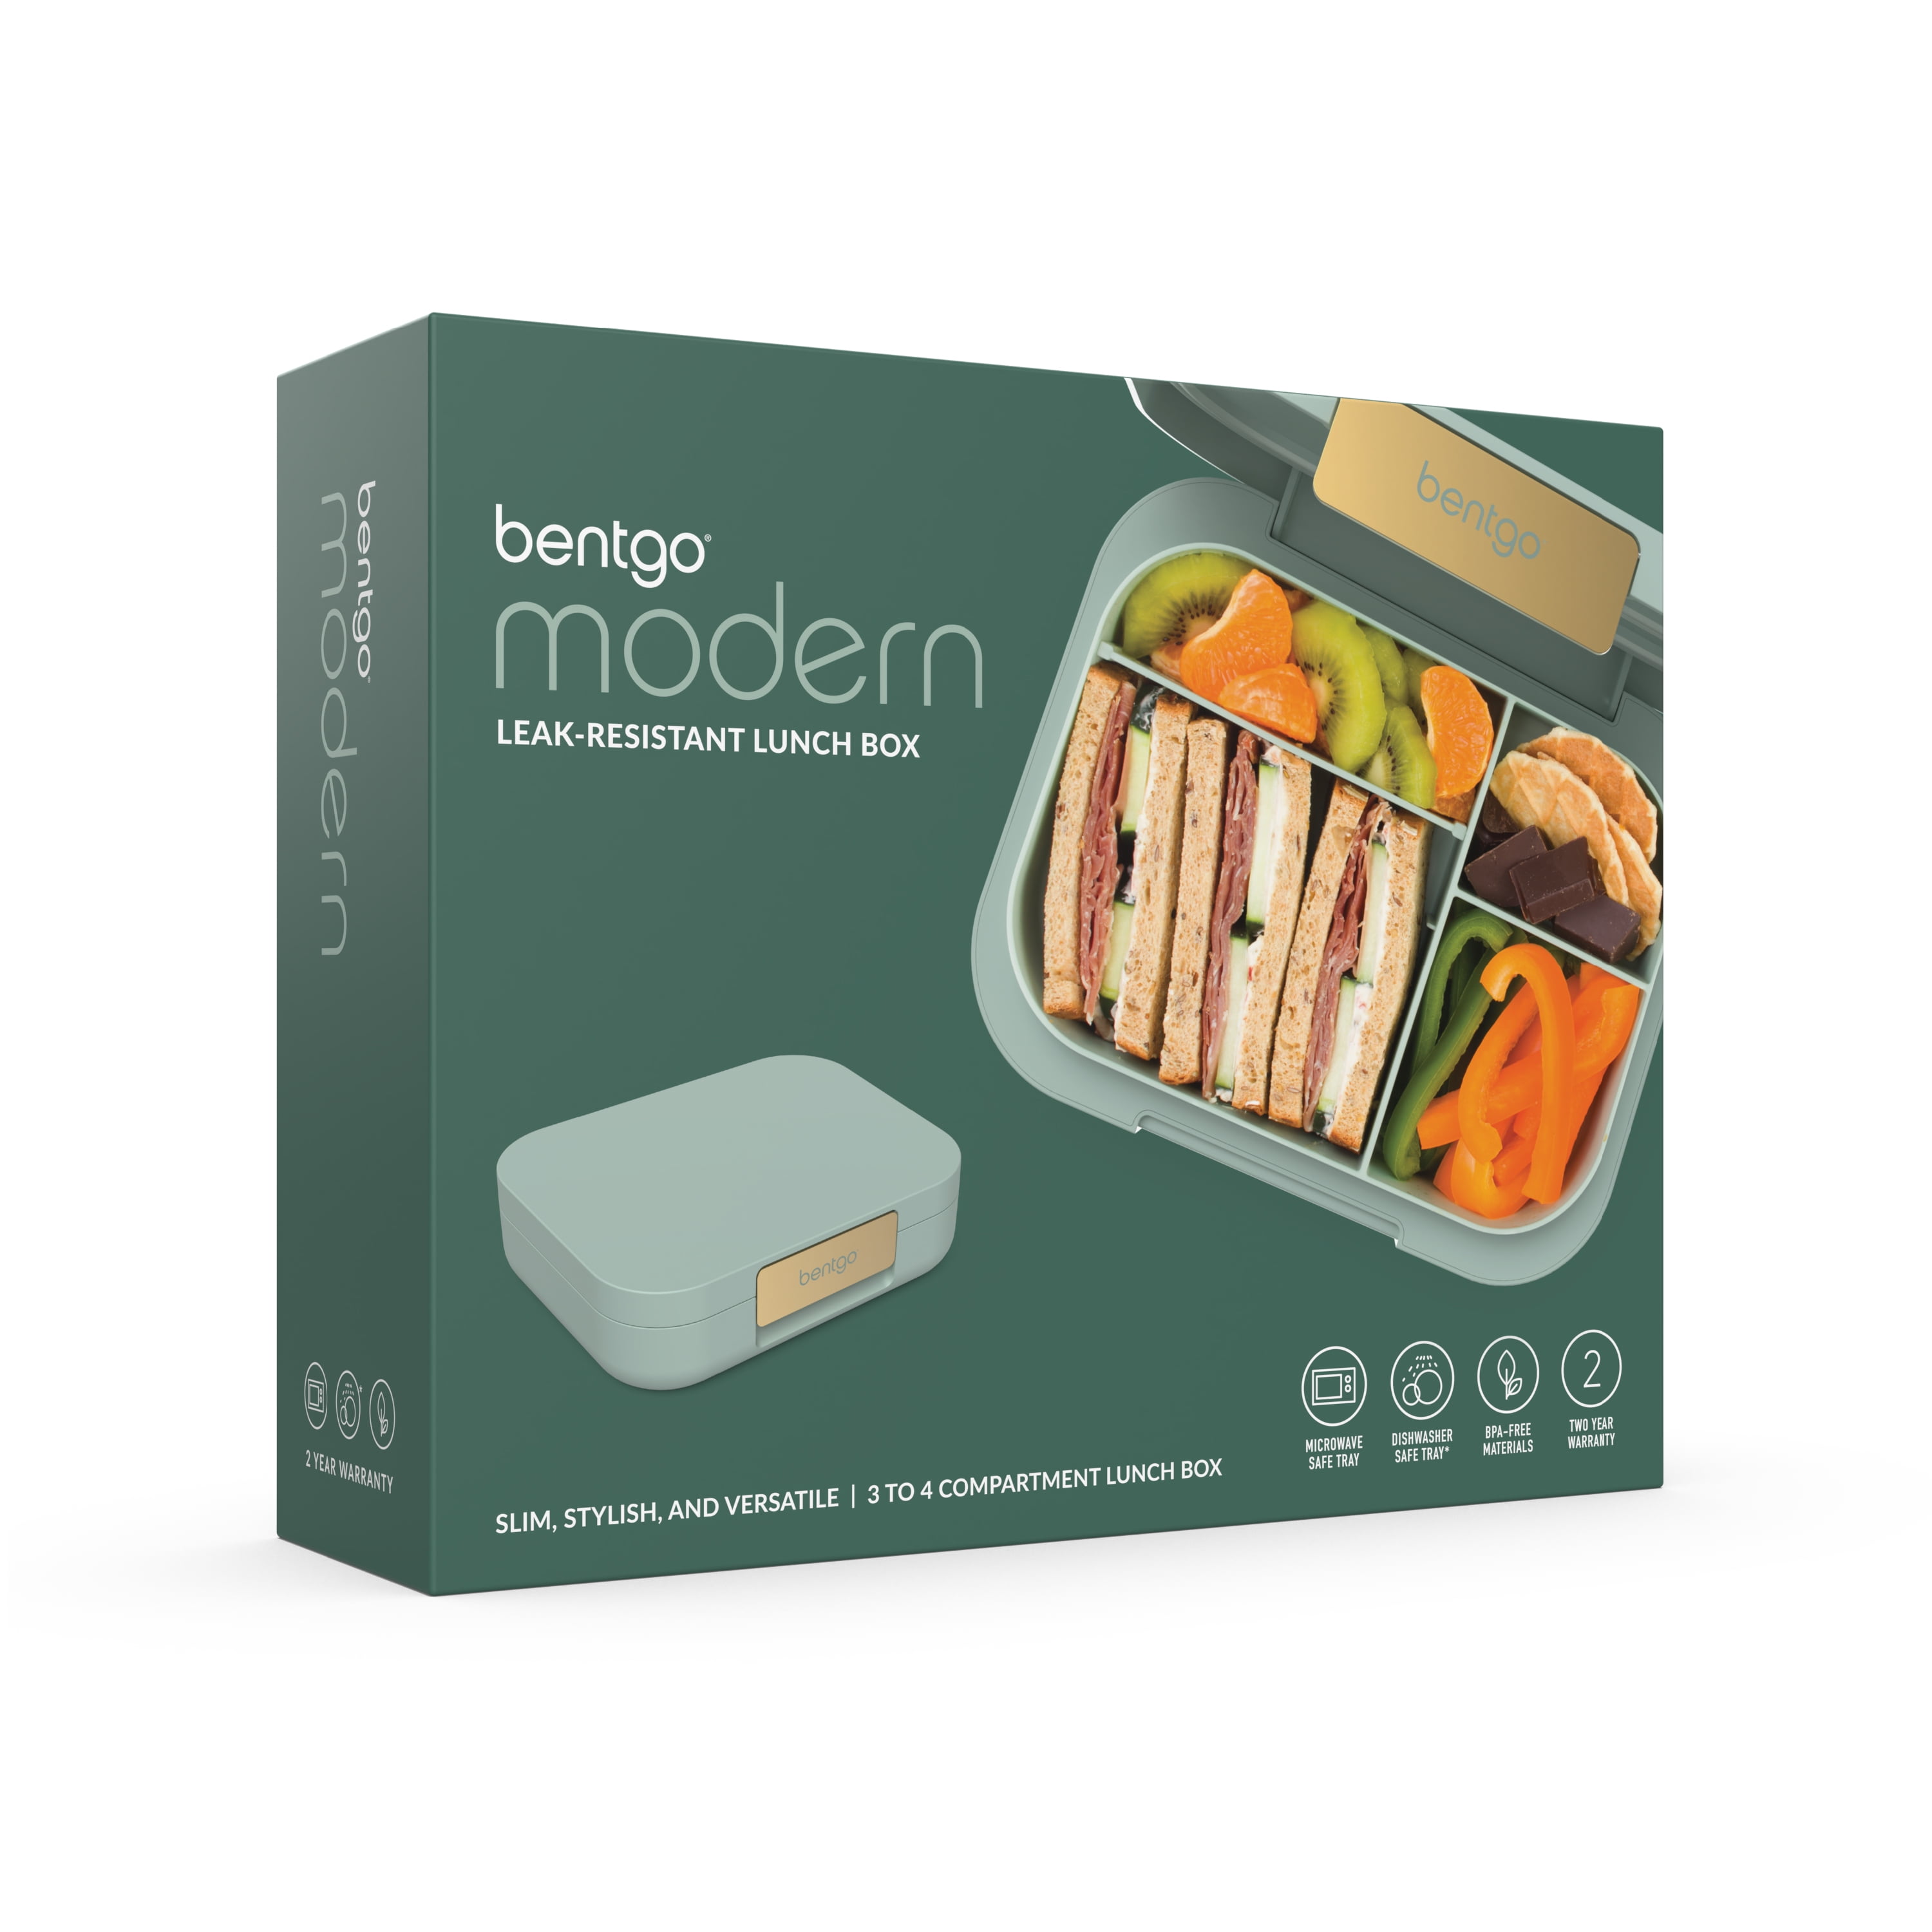 Bentgo Modern 4 Compartment Bento Style Leakproof Lunch Box - Dark Gray